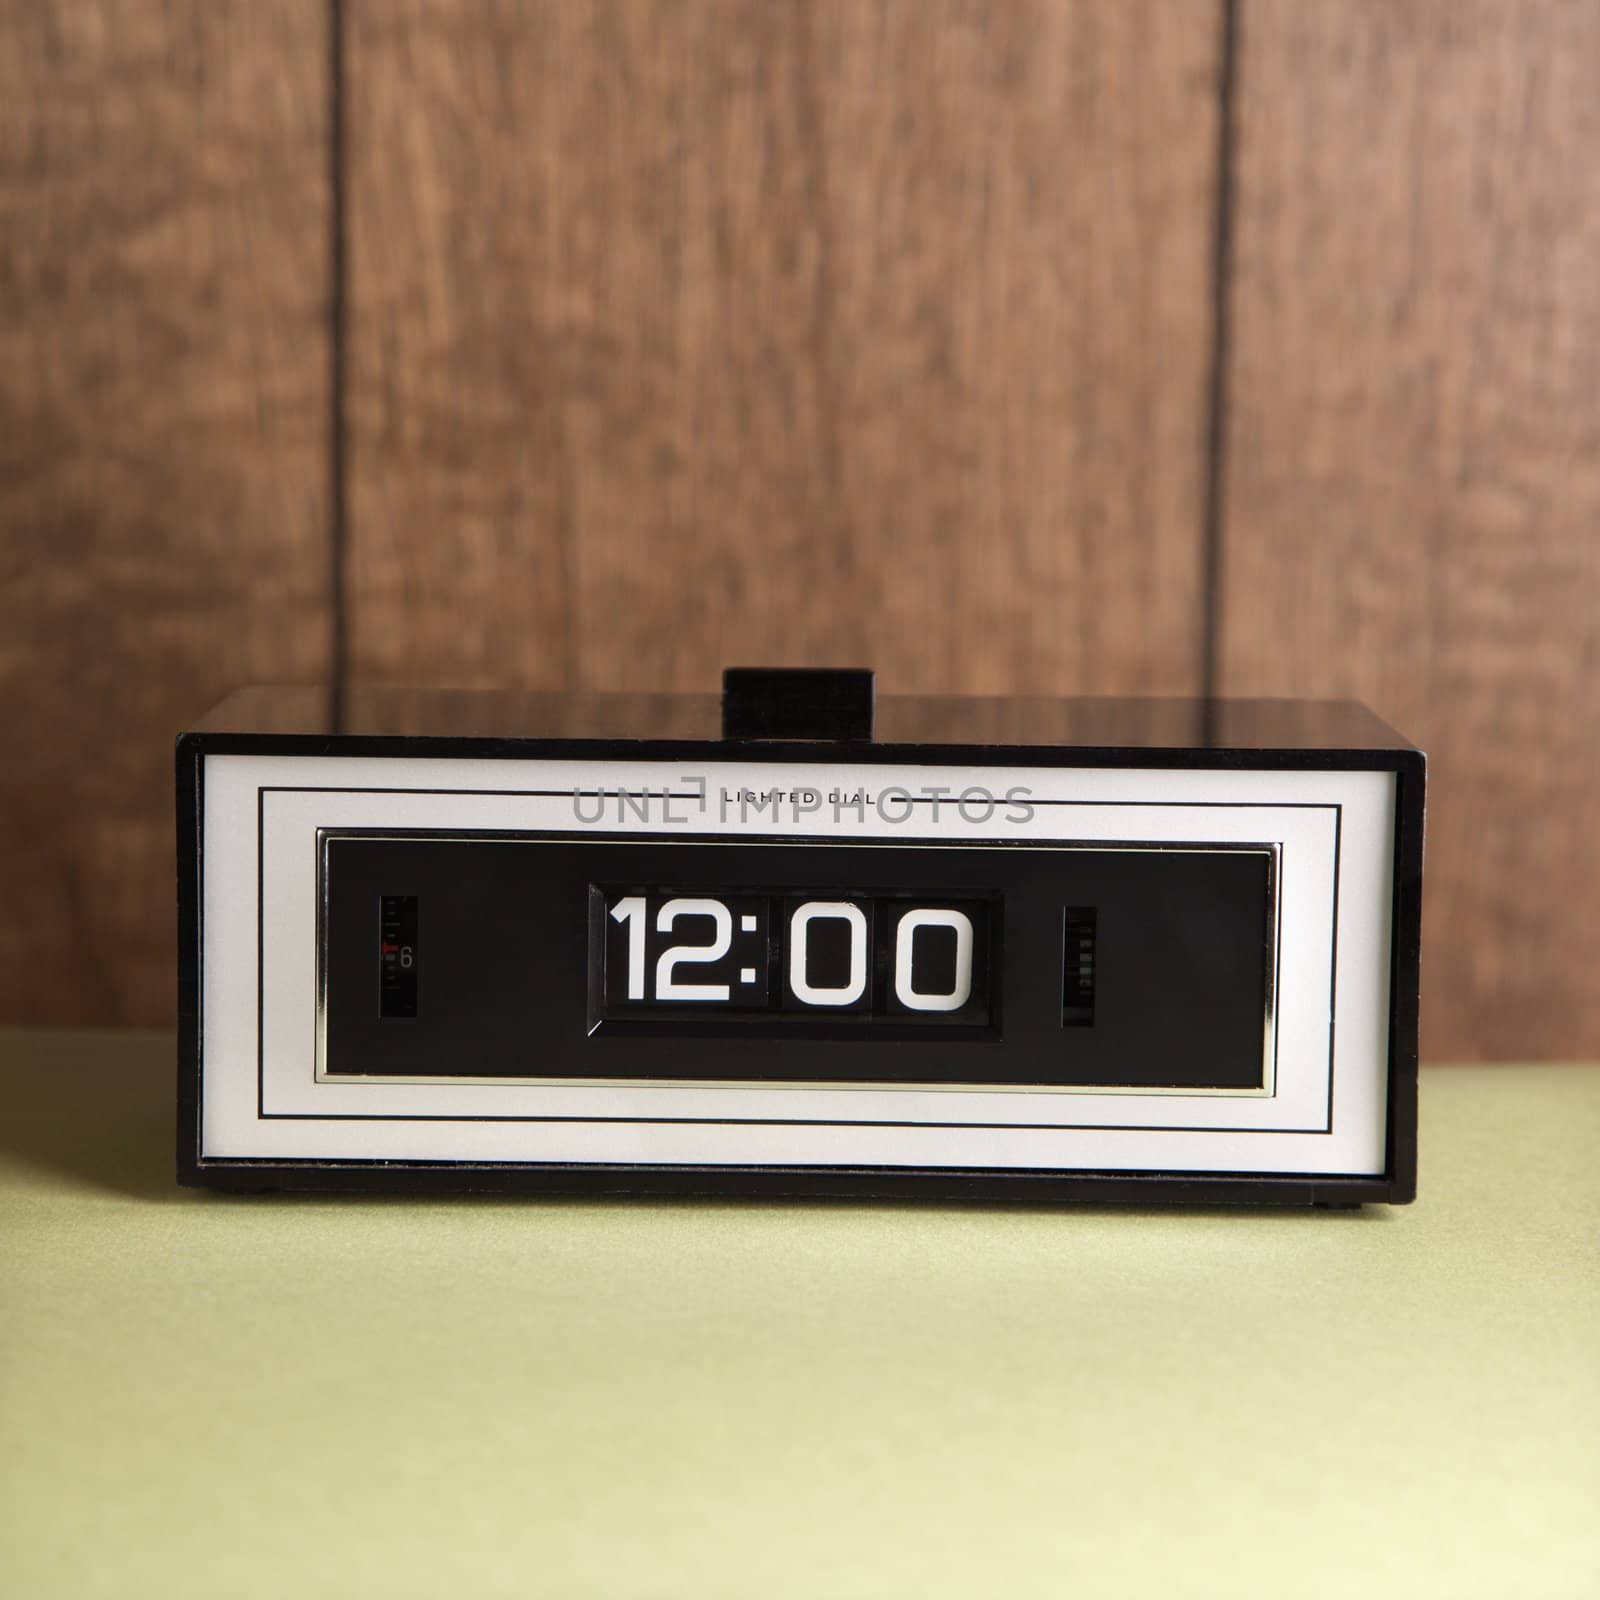 Retro clock set for 12:00. by iofoto